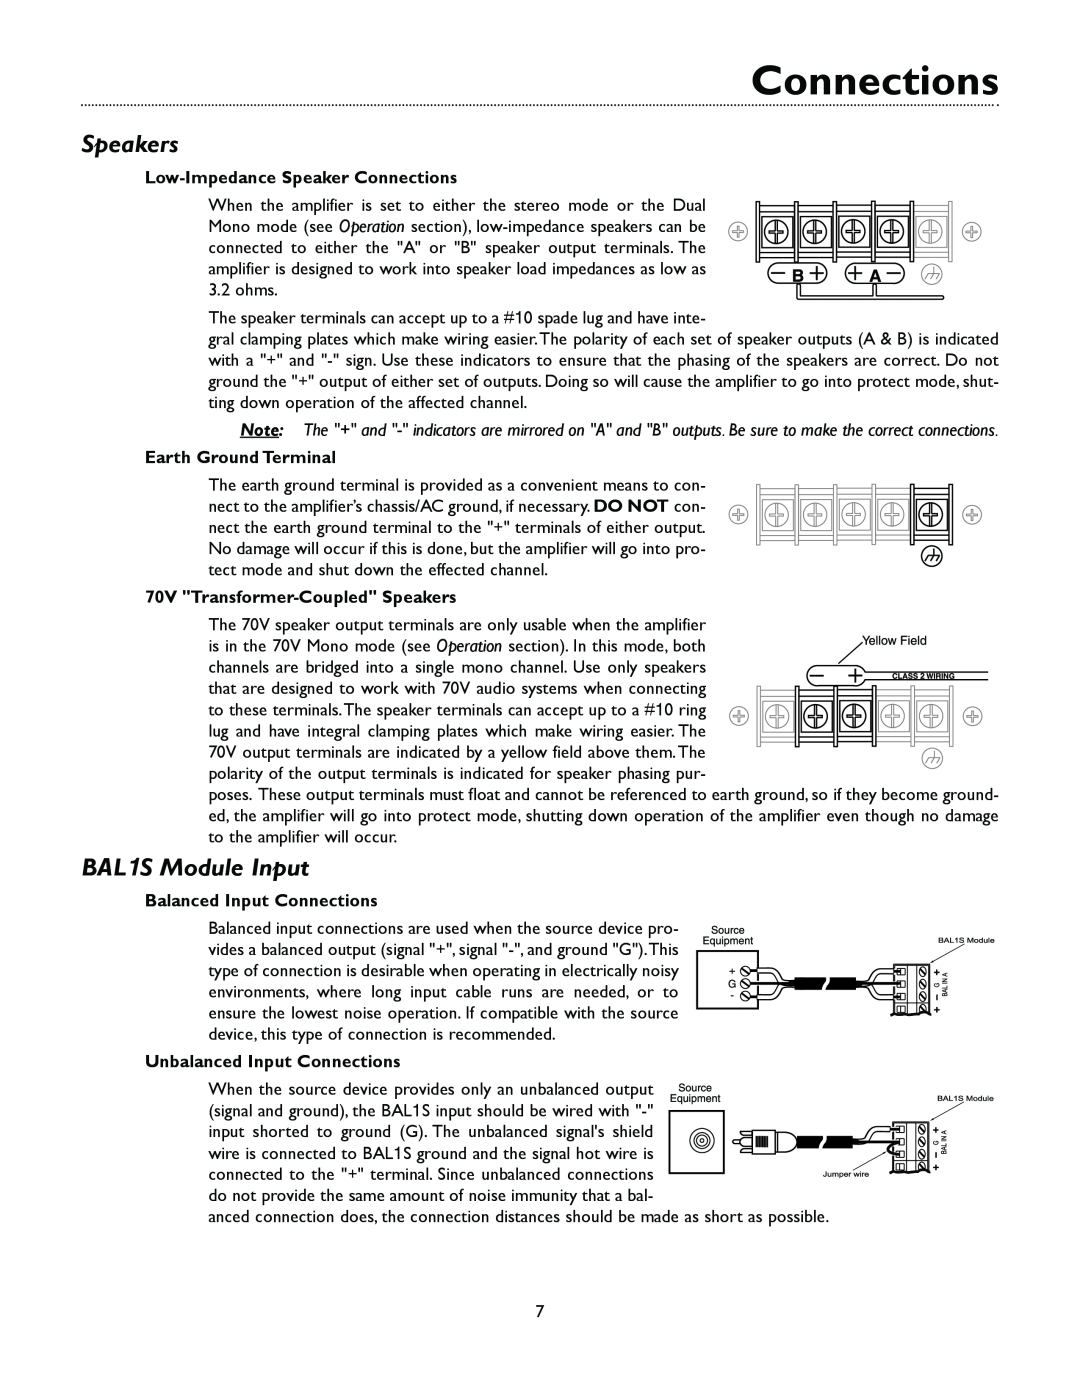 Bogen M300 manual Speakers, BAL1S Module Input, Low-ImpedanceSpeaker Connections, Earth Ground Terminal 